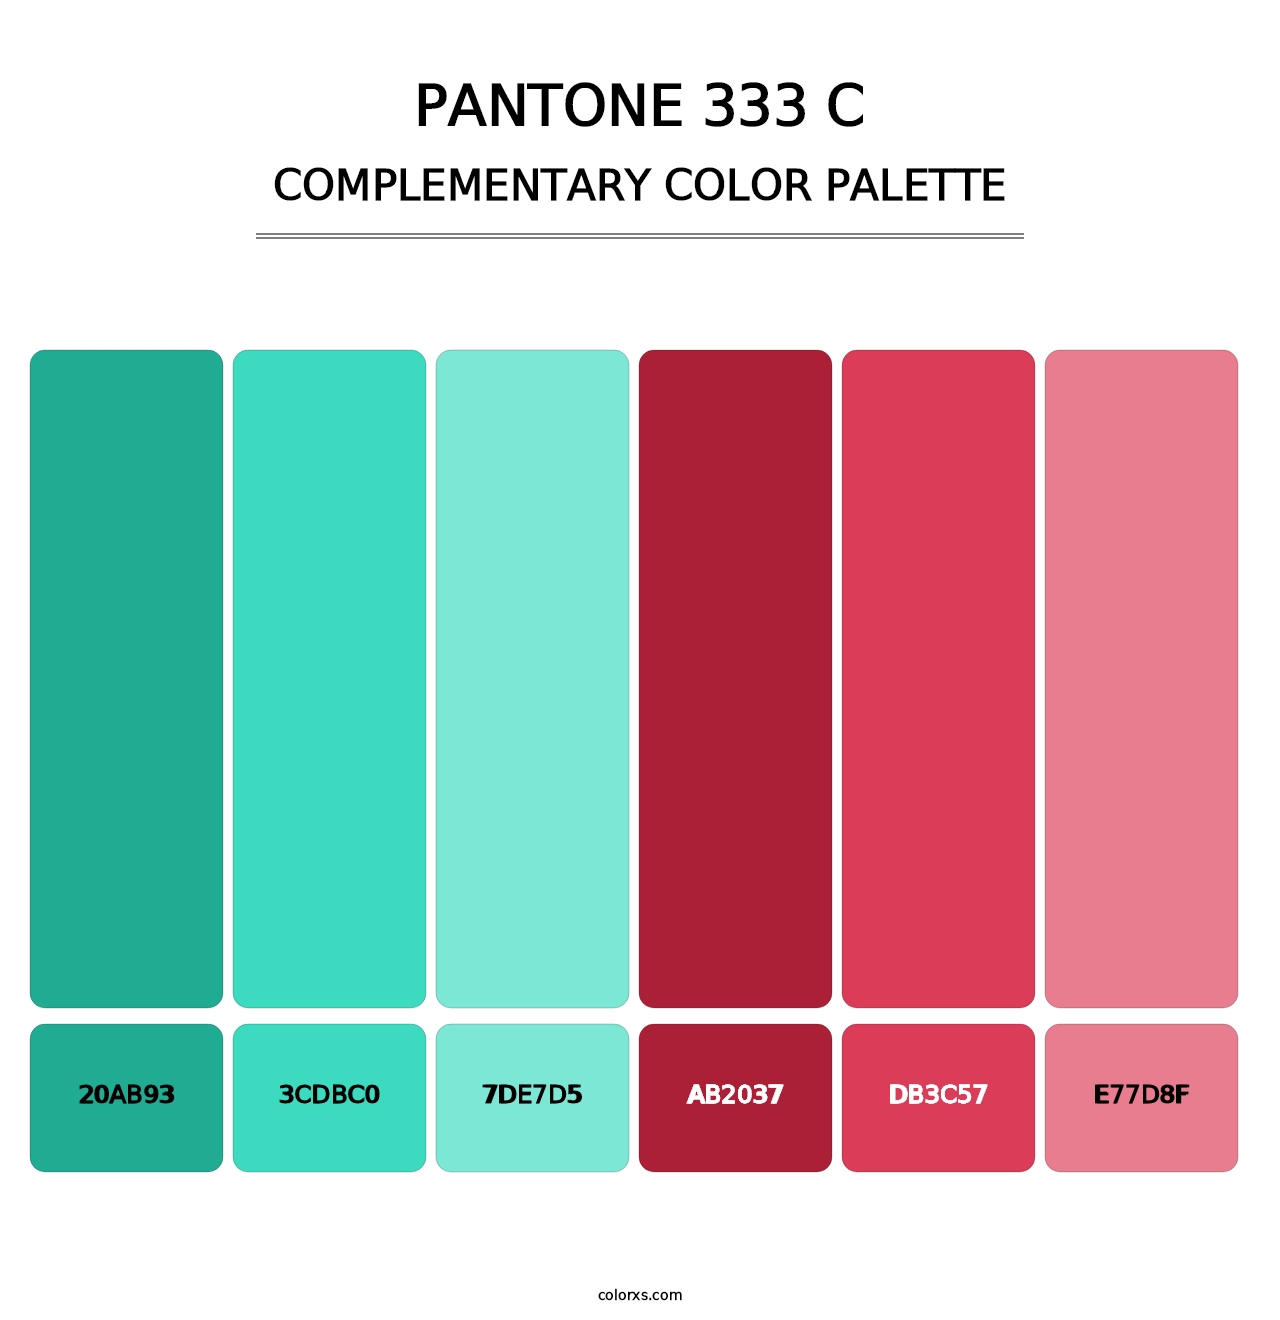 PANTONE 333 C - Complementary Color Palette